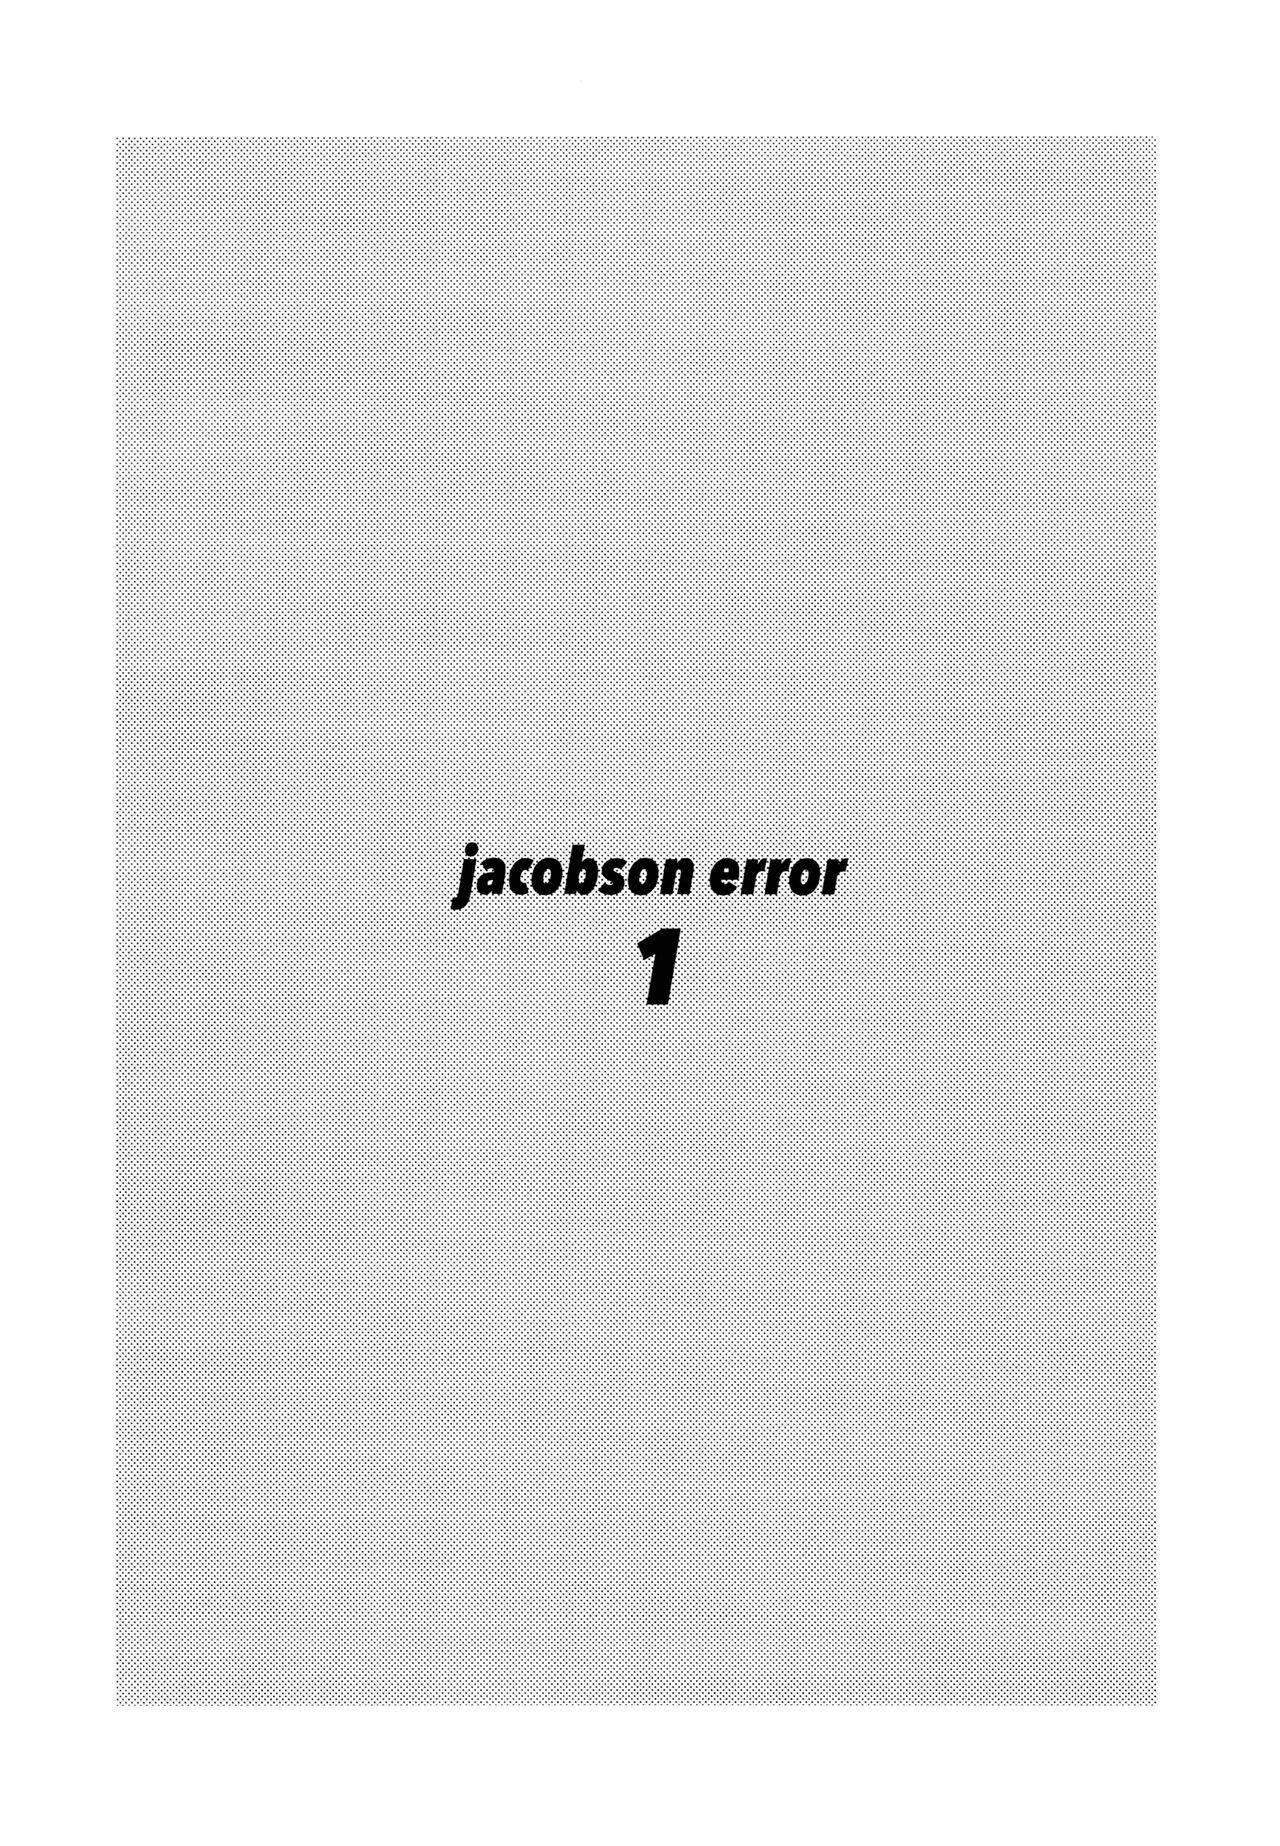 jacobson error1 2